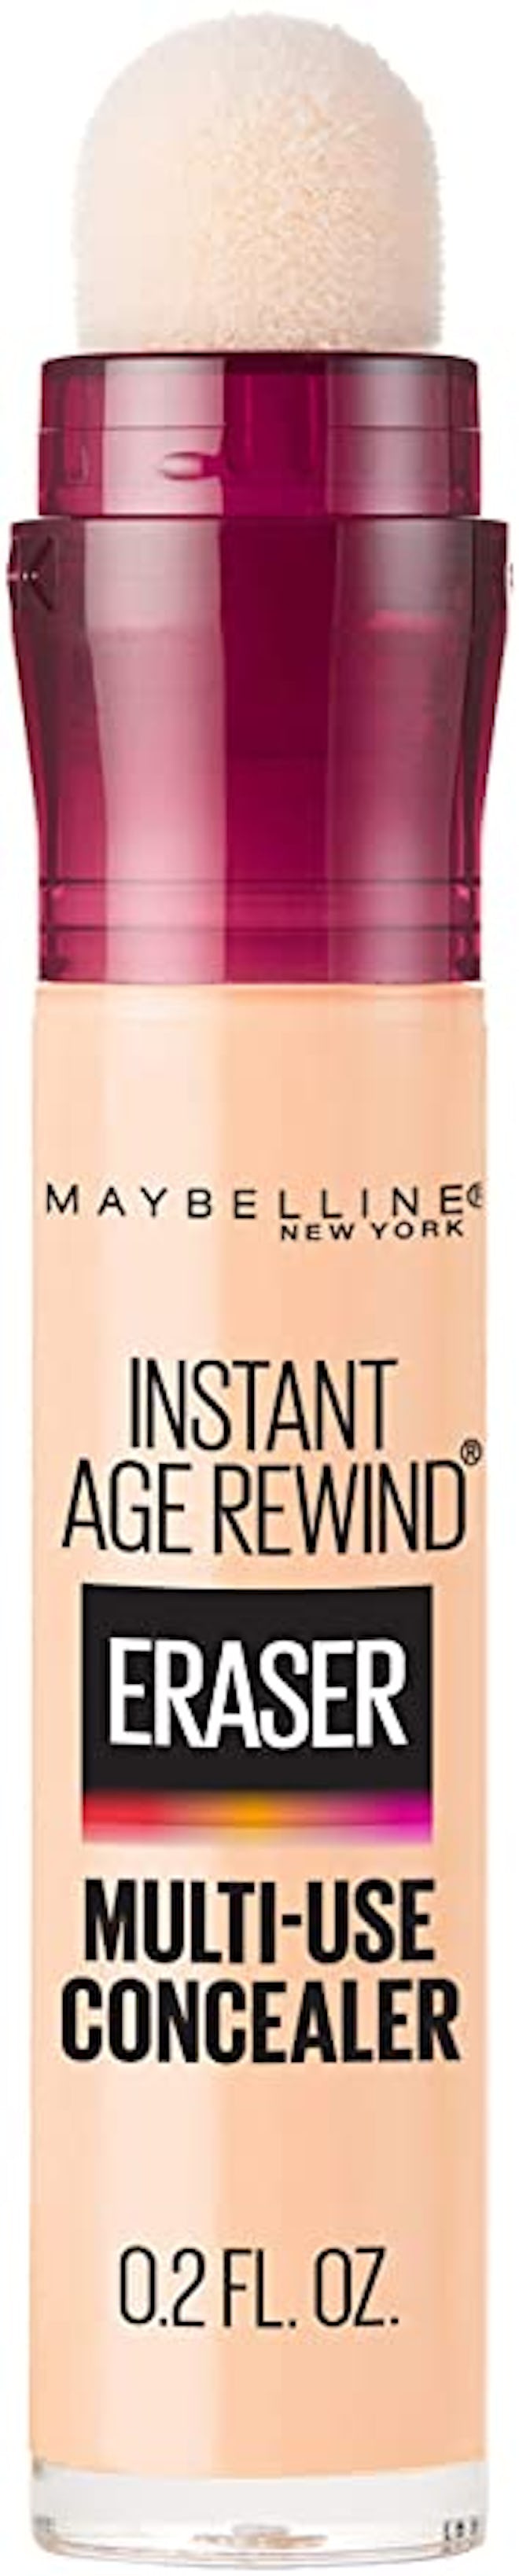 Maybelline Instant Age Rewind Multi-Use Concealer